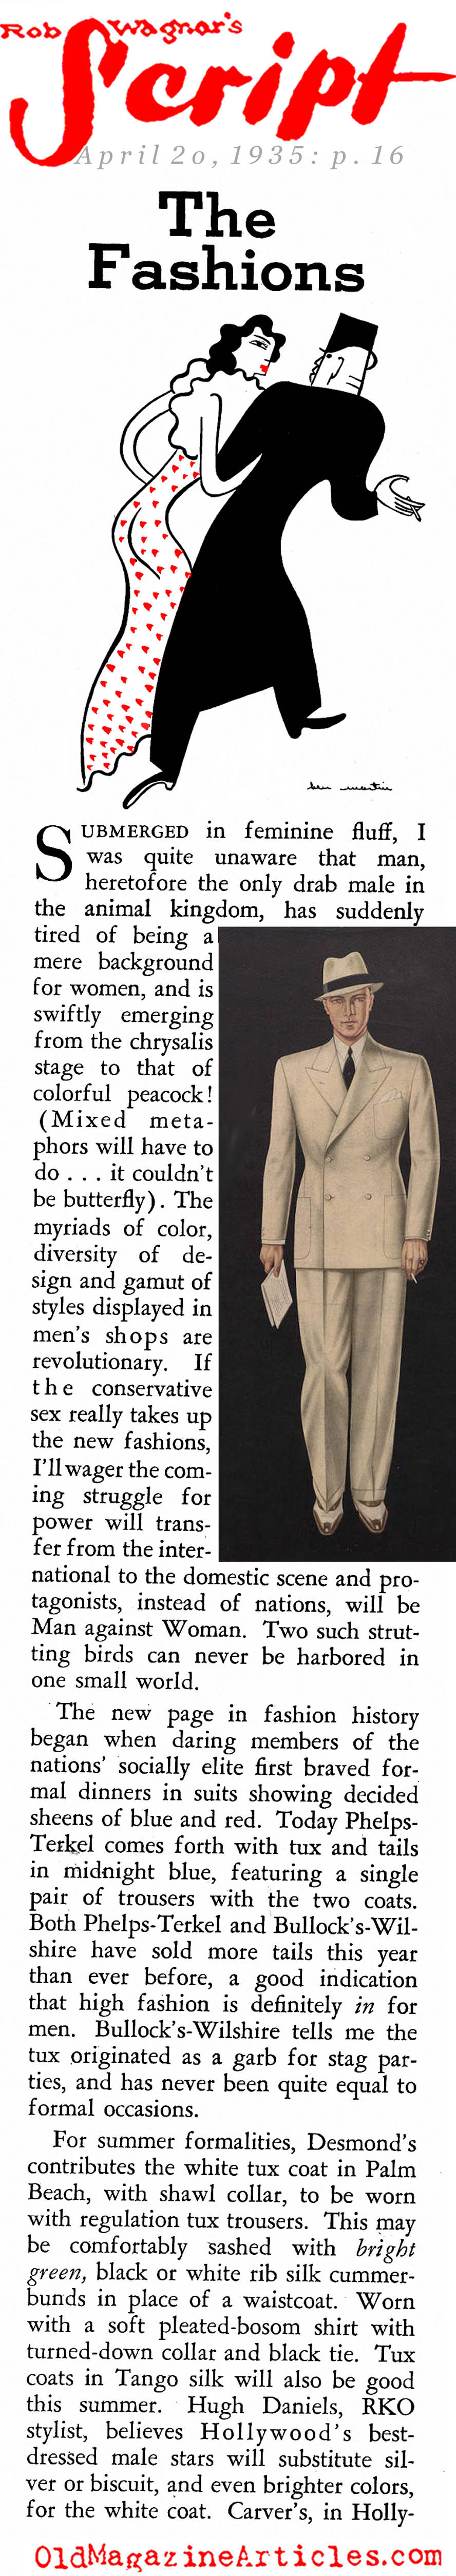 Spring Fashions (Rob Wagner's Script Magazine, 1935)